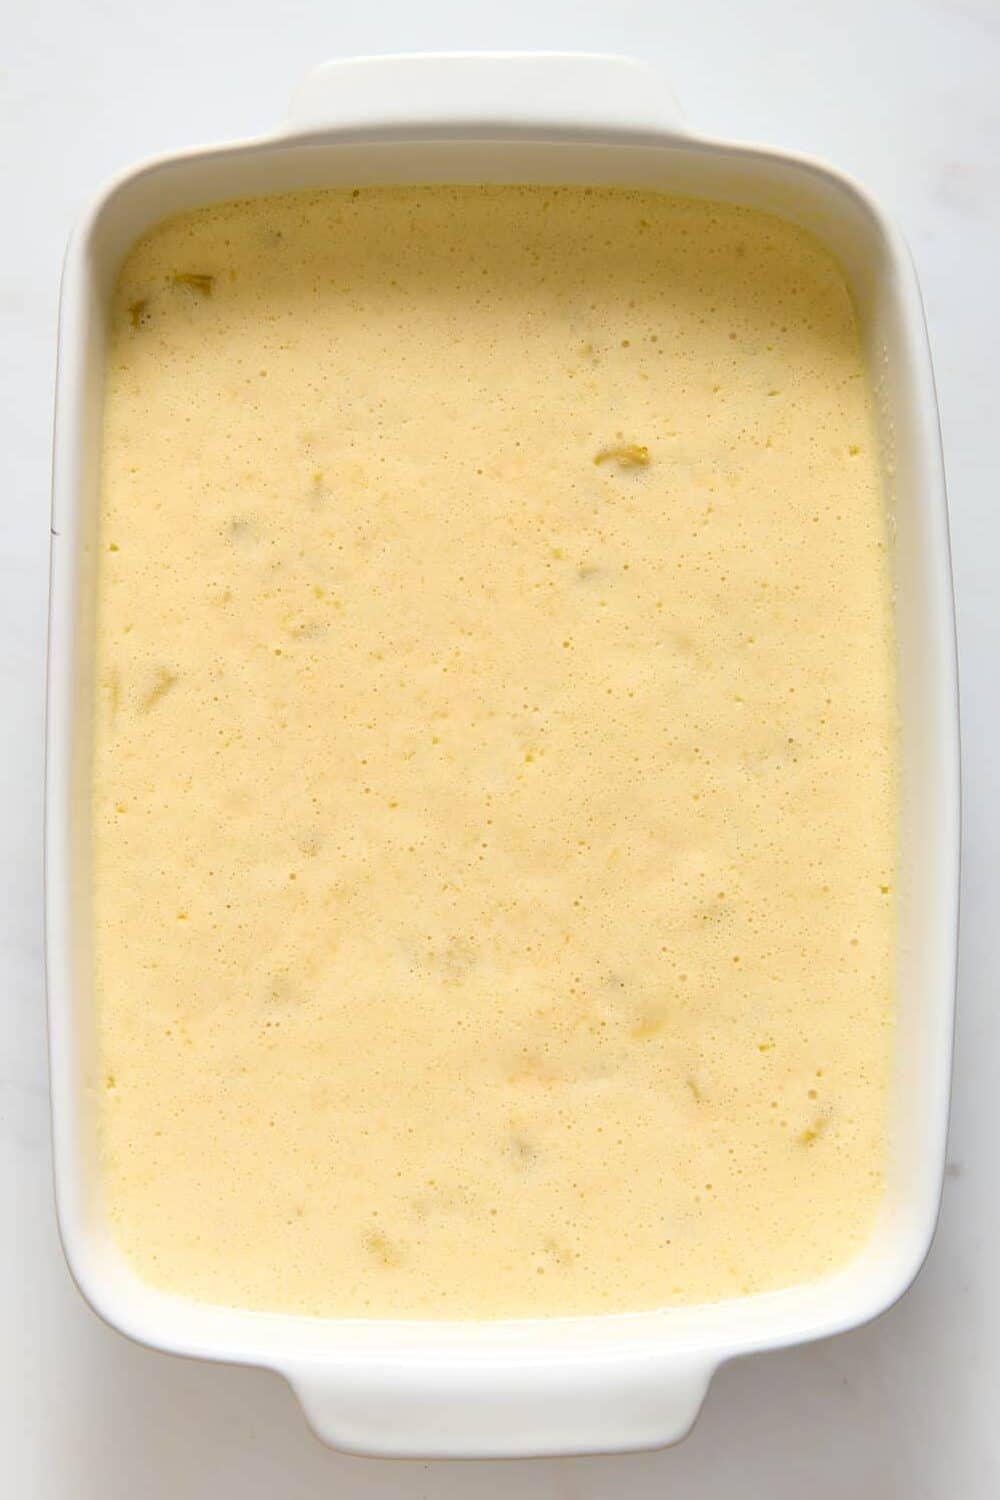 Top 10 image of green chili egg casserole mixture prepared in a 9 x 13" casserole dish.